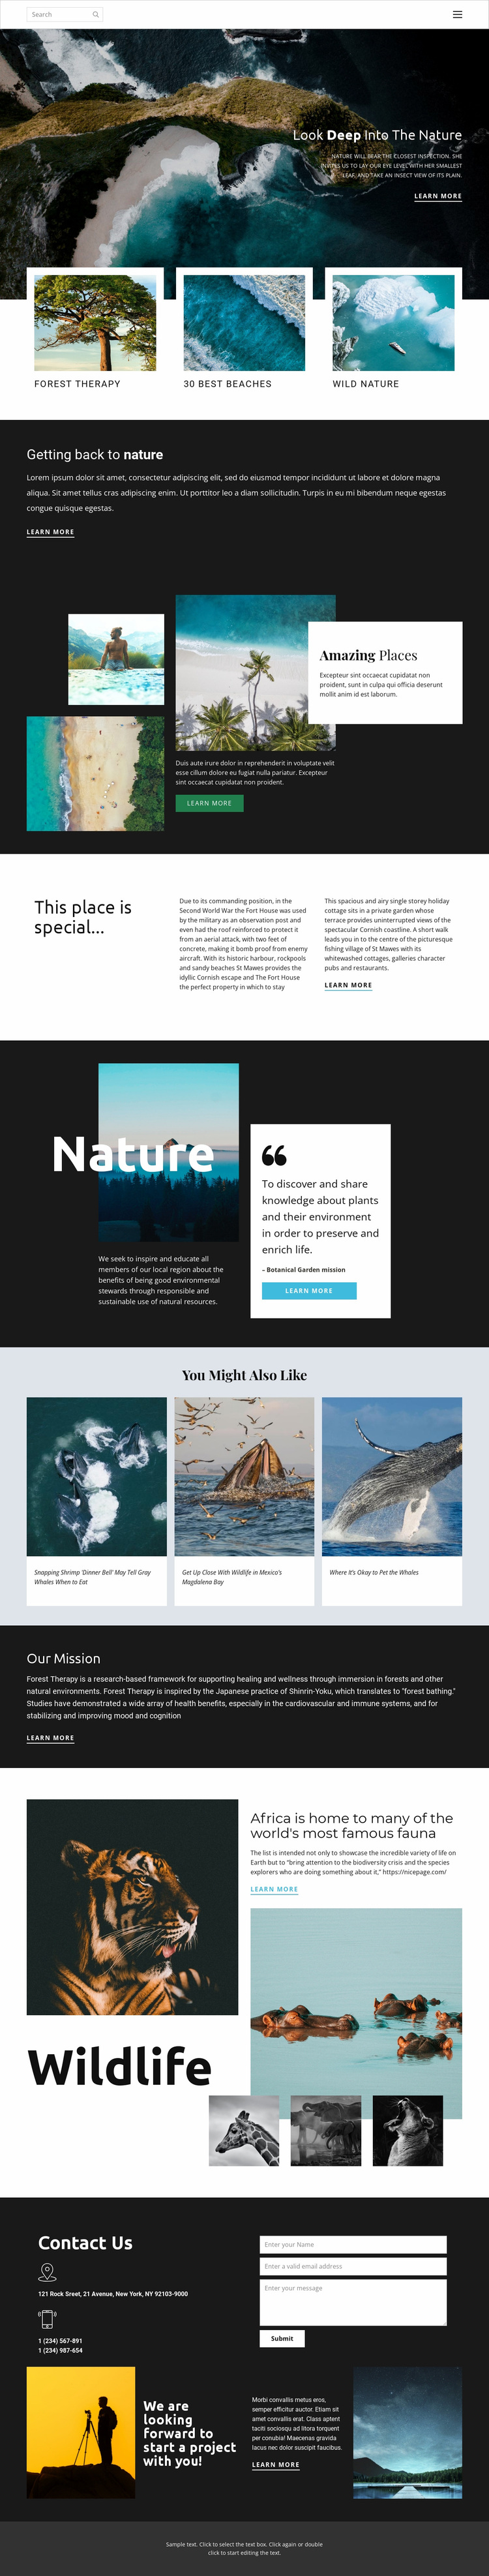 Exploring wildlife and nature Website Design